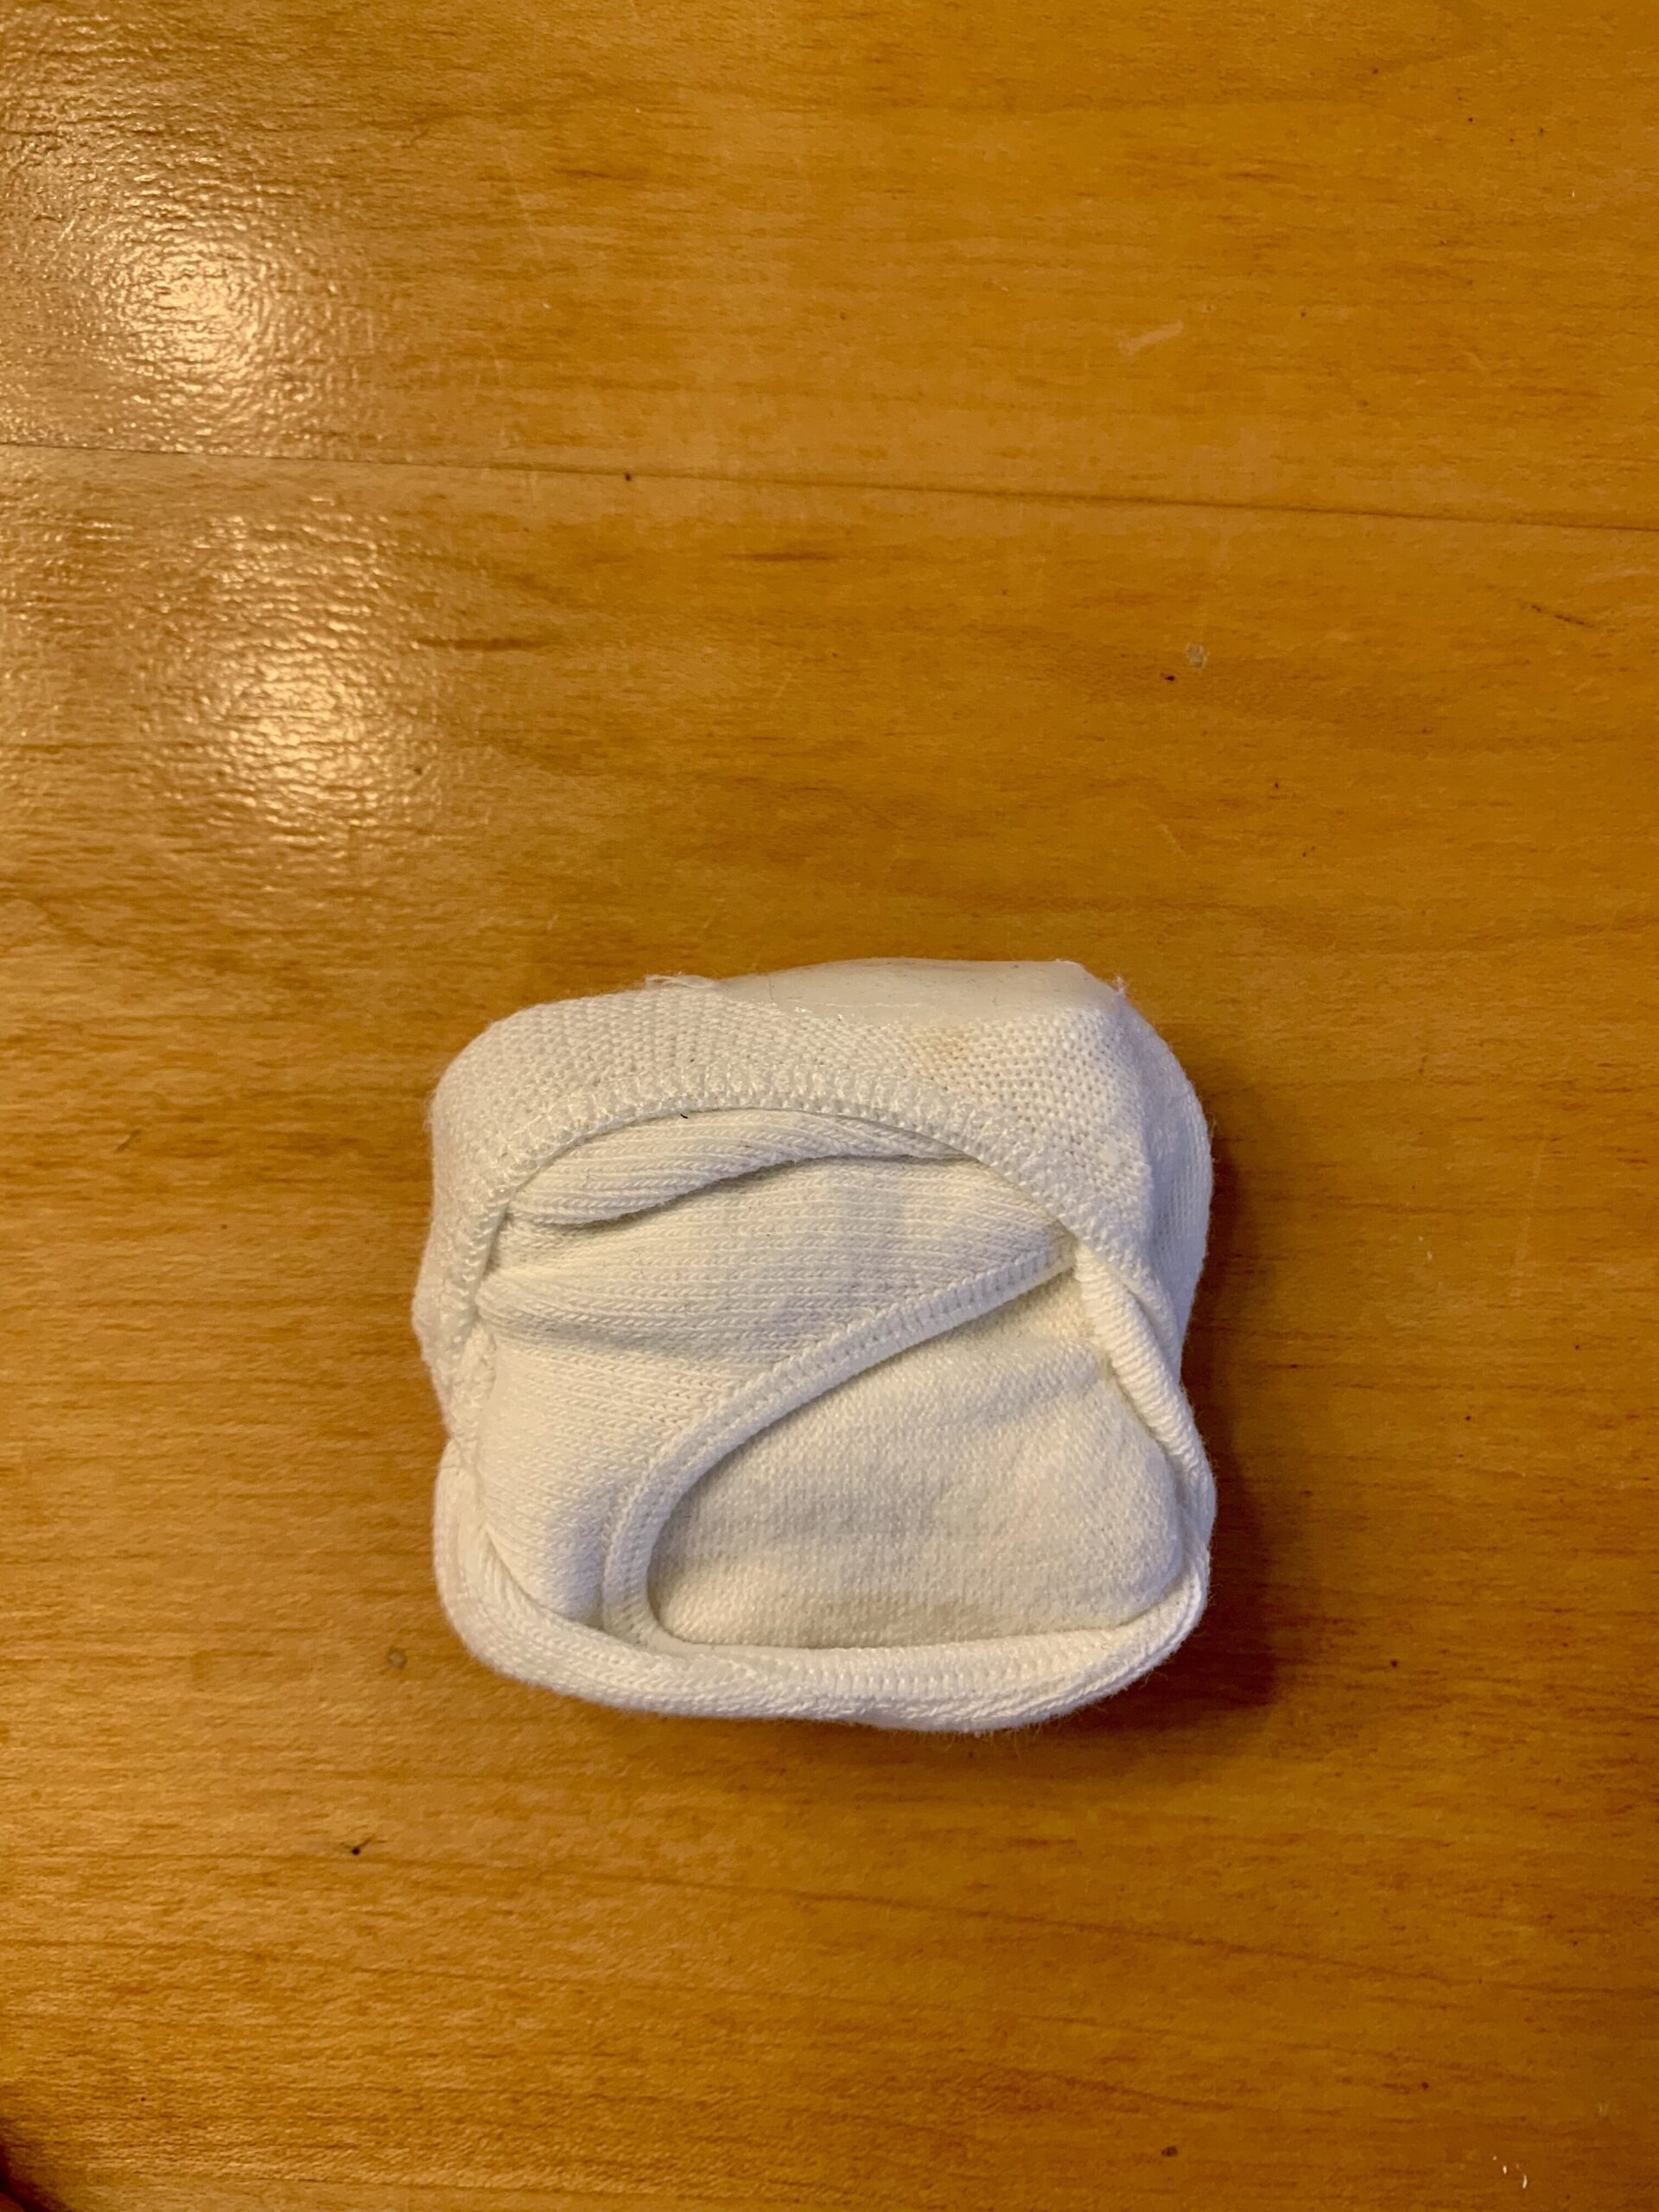 How to fold no show socks fold method